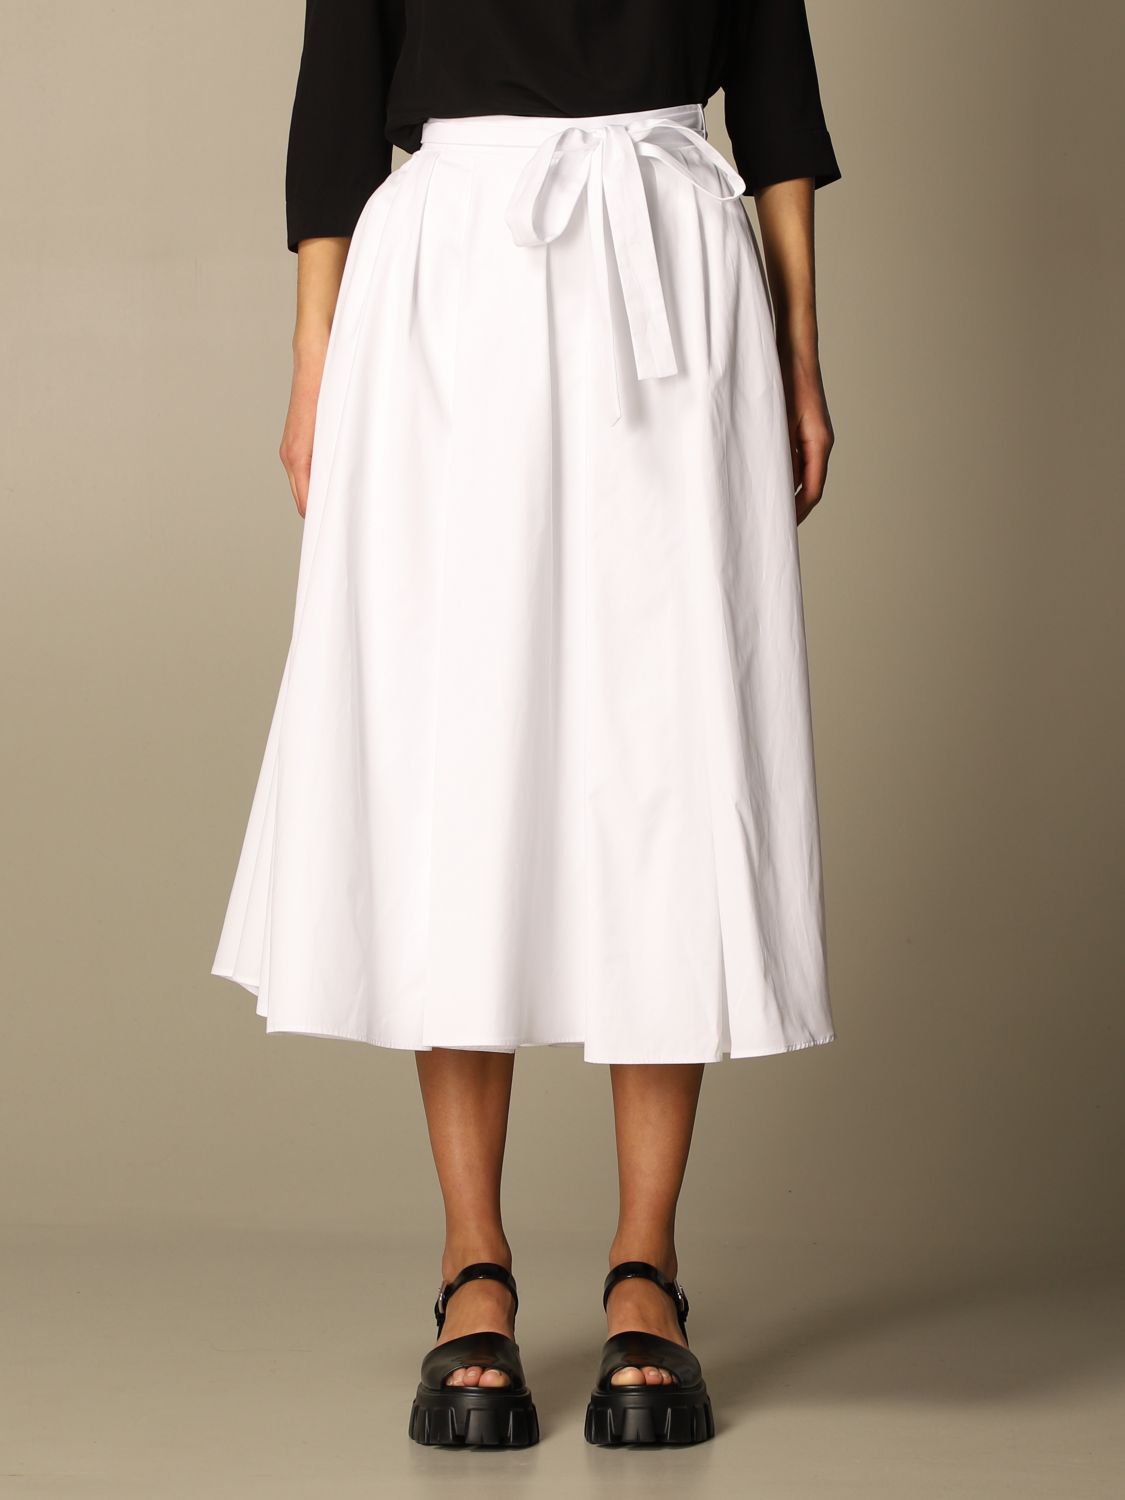 PRADA: wide poplin skirt with band belt | Skirt Prada Women White